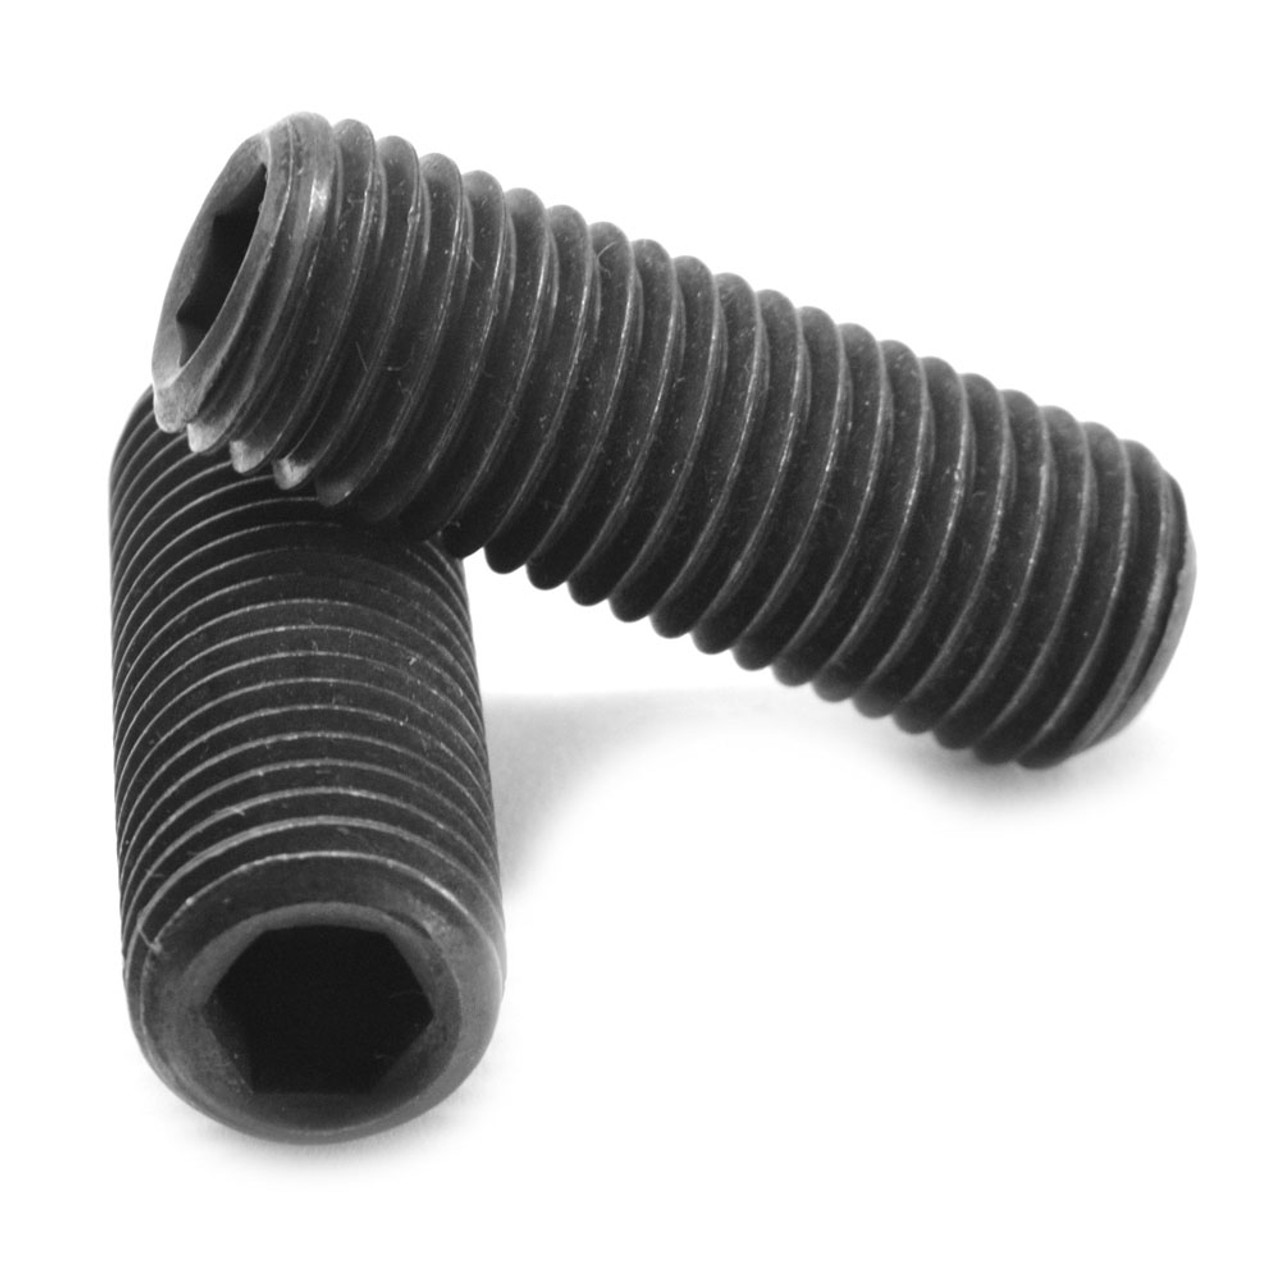 9/16"-12 x 1 1/2" Coarse Thread Socket Set Screw Cup Point Alloy Steel Black Oxide